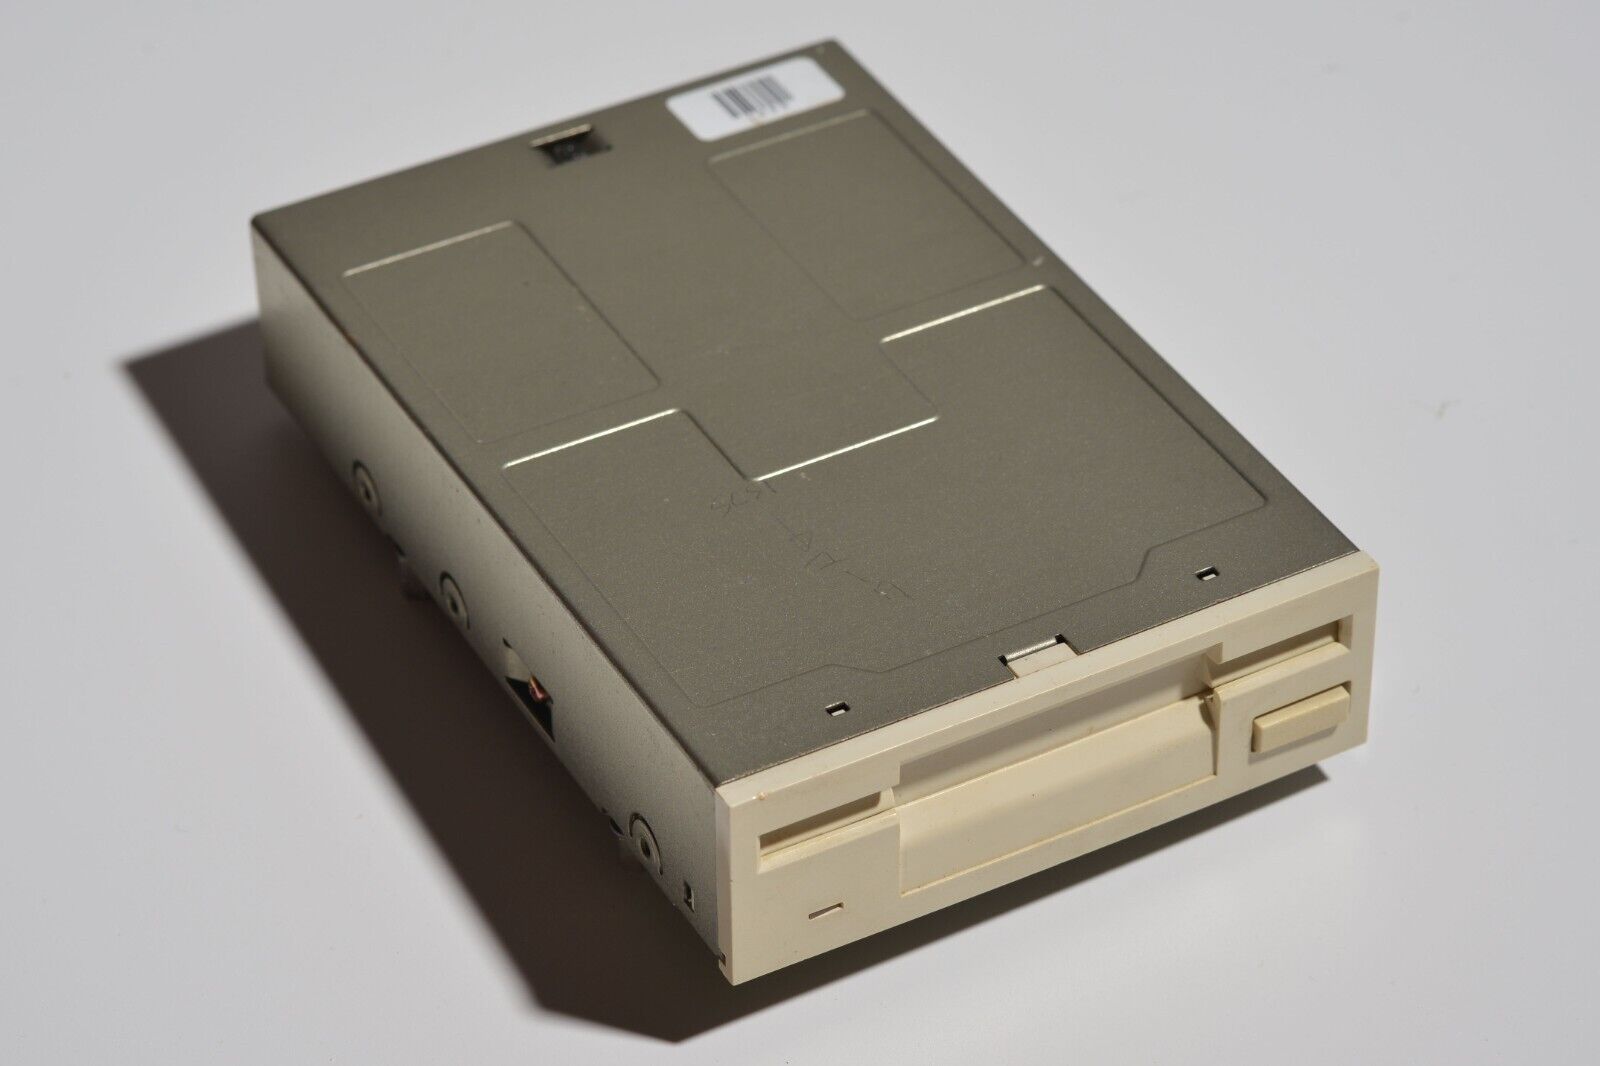 Chinon FB-357A Internal Floppy Drive for Amiga